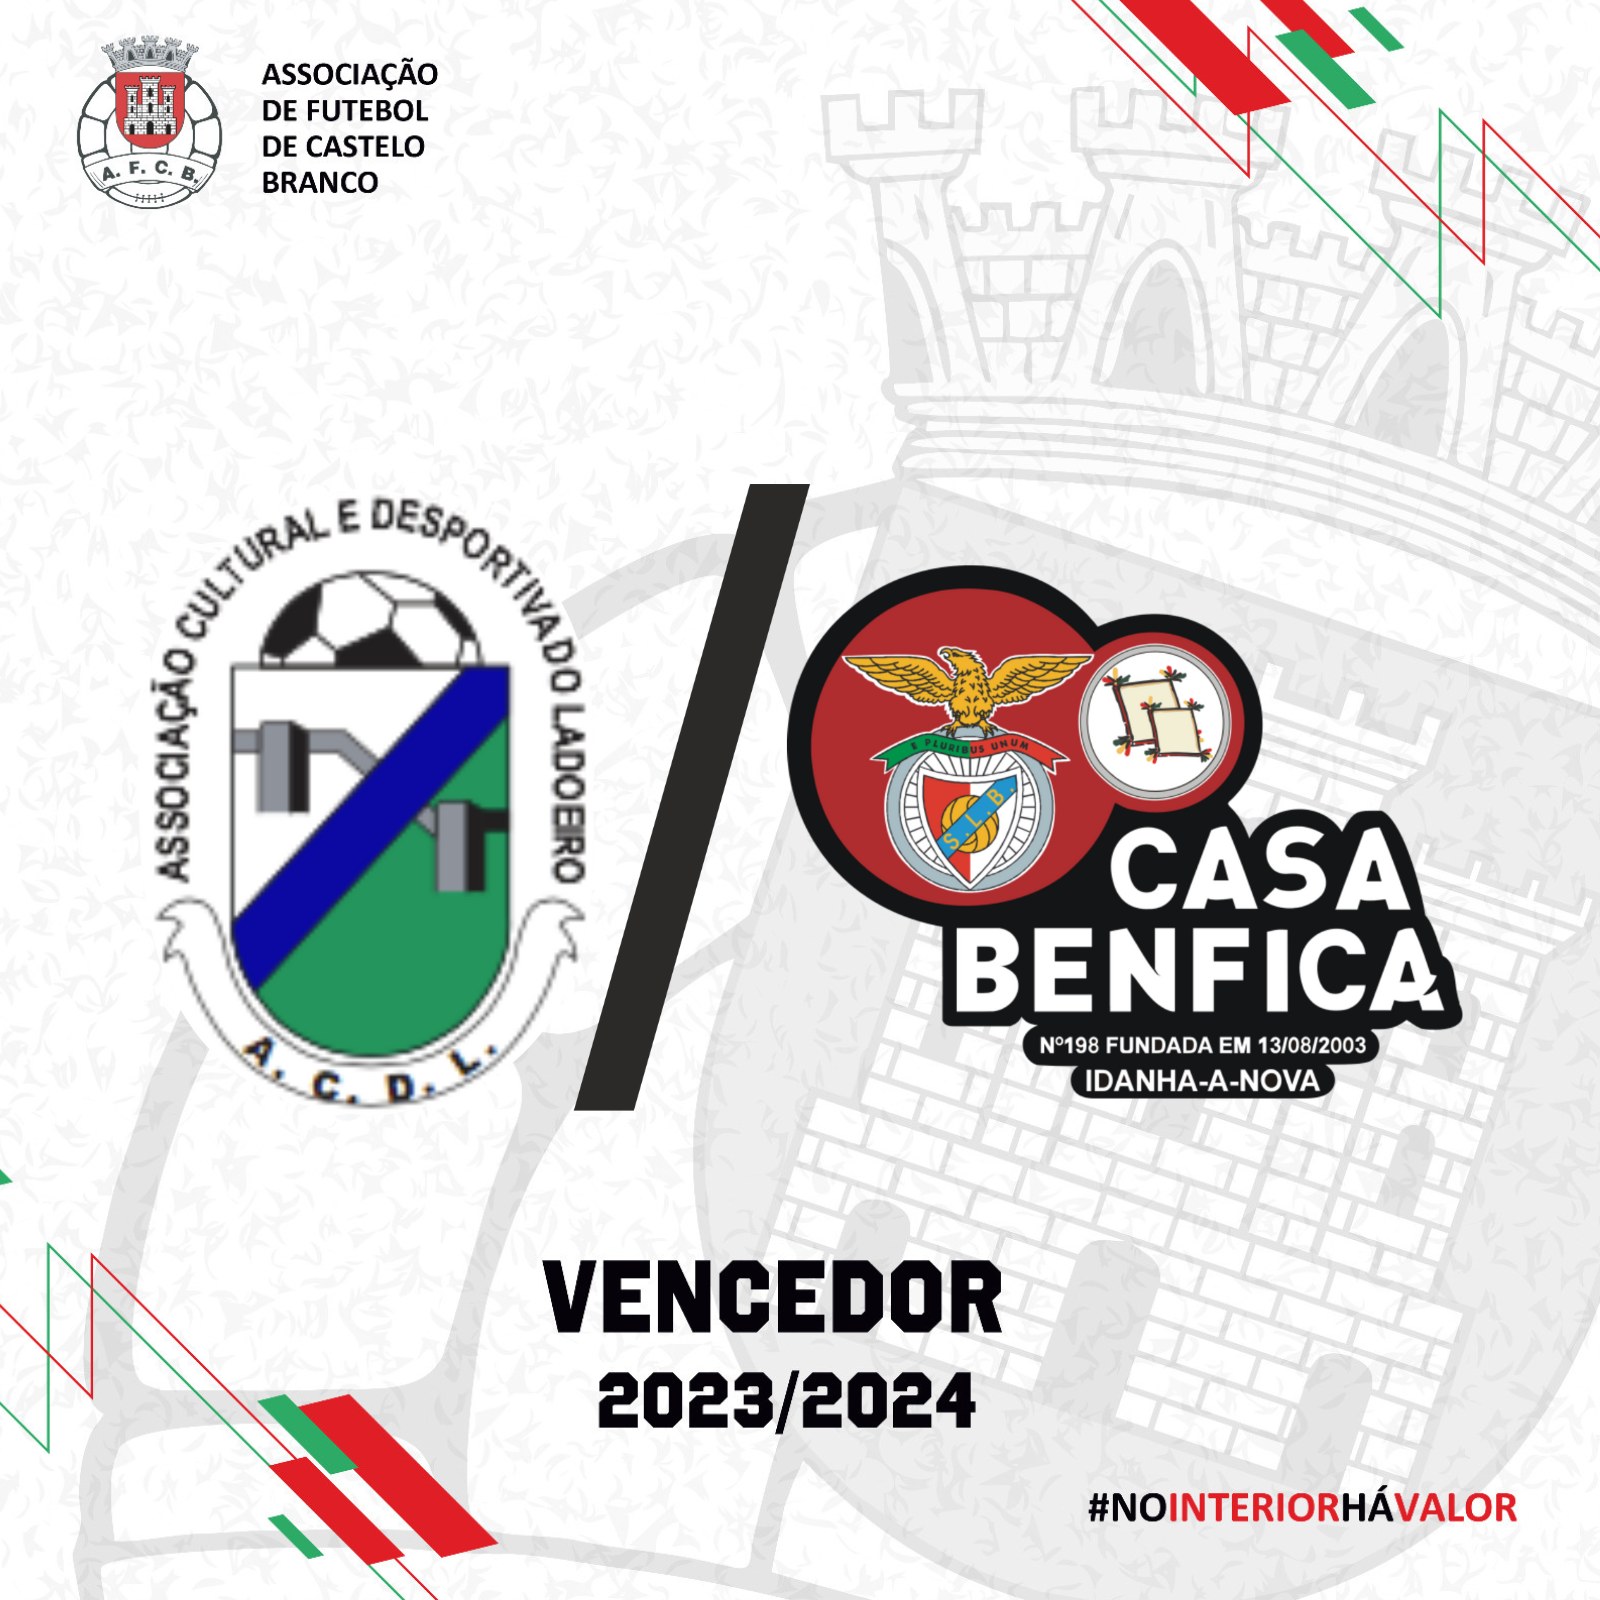 Futsal: ACD Ladoeiro / Casa Benfica Idanha-a-Nova conquista Torneio de Encerramento Iniciados